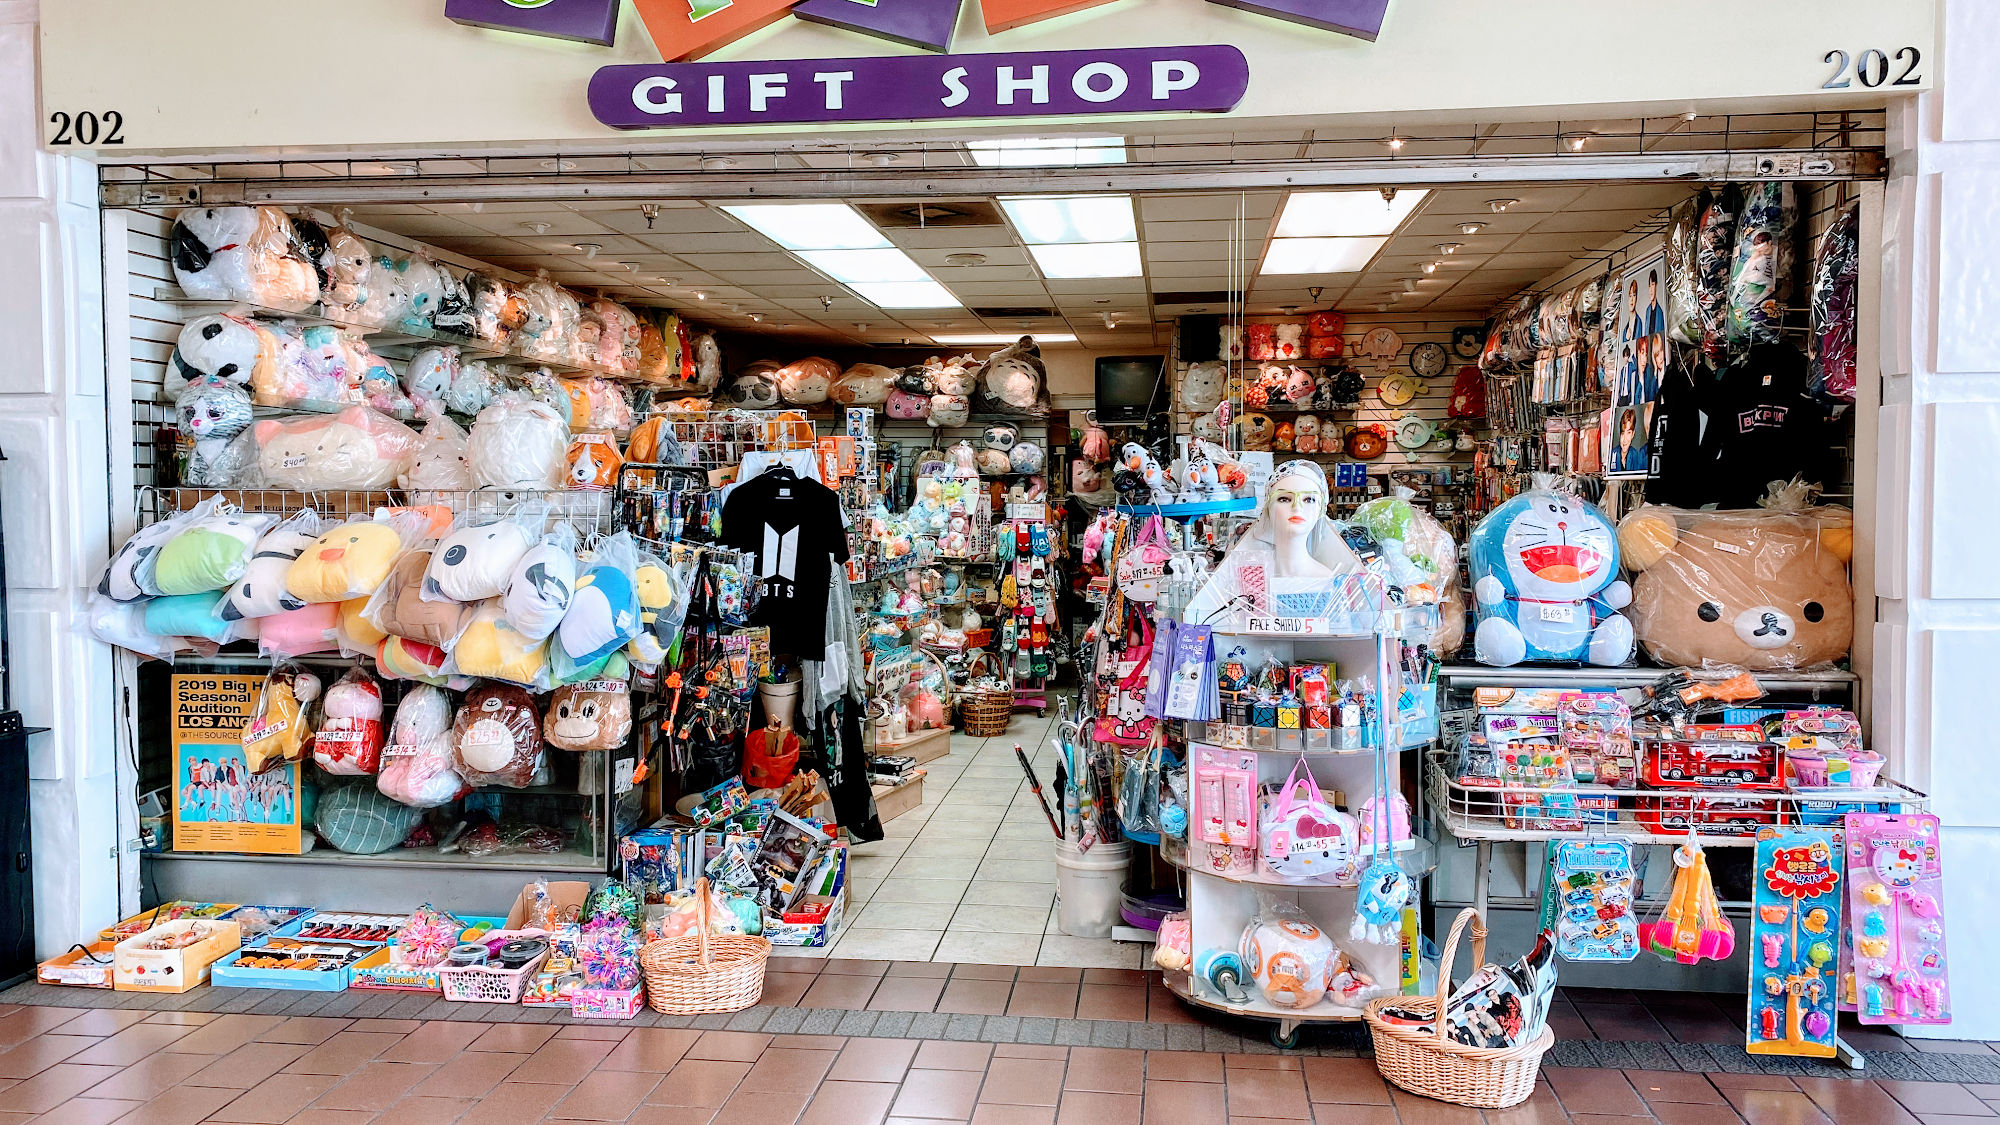 Oppa's Gift Shop